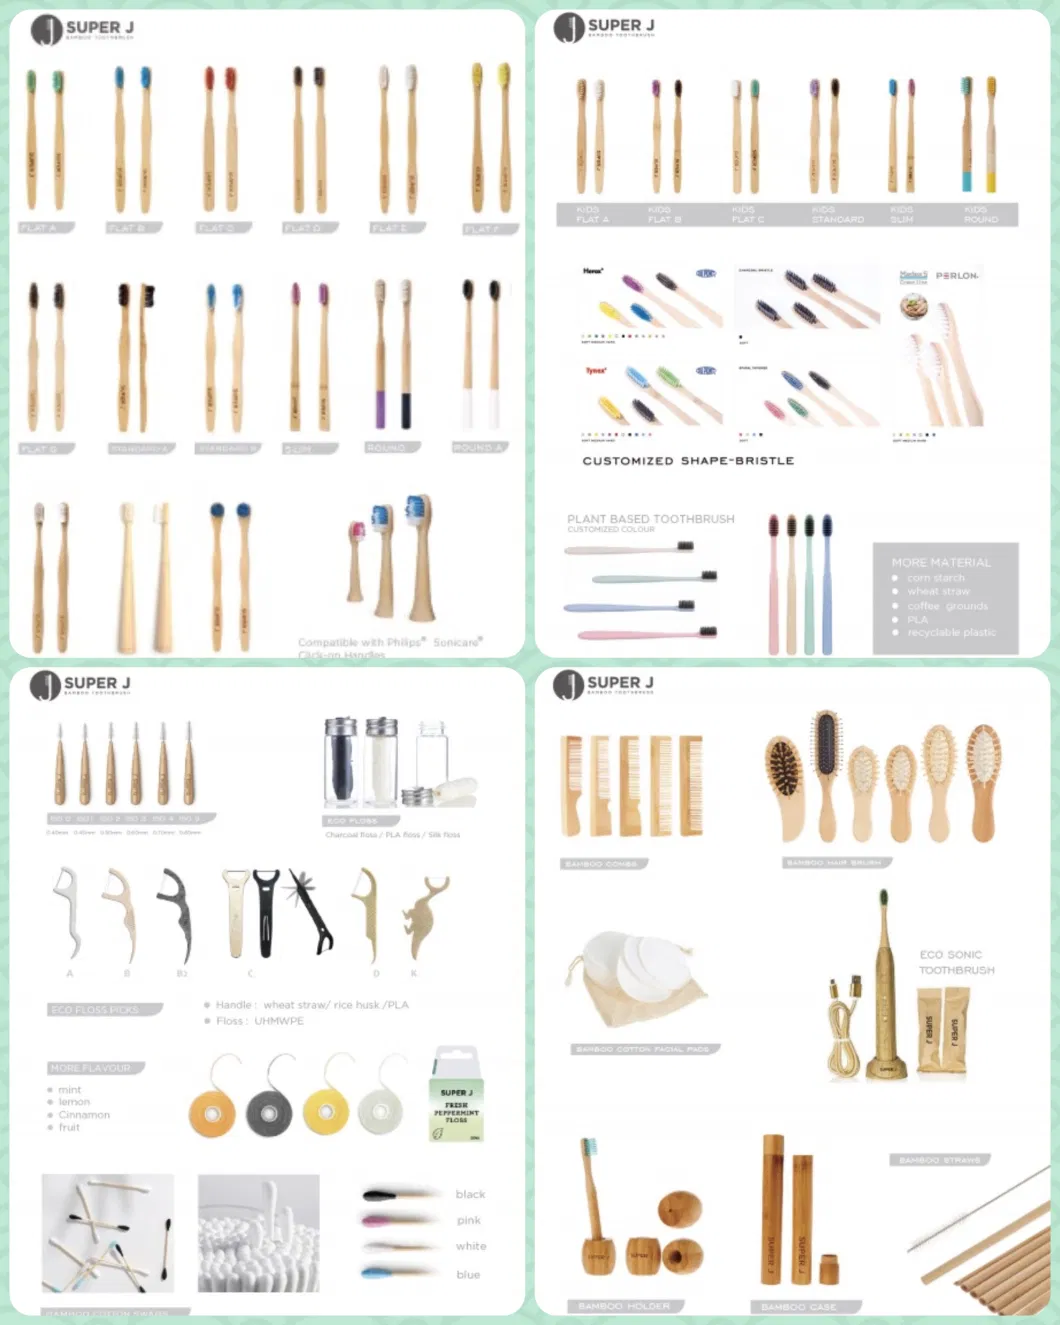 Custom Travel Bamboo Made Toothbrush Small Supplier Natural Portable Bamboo Toothbrush